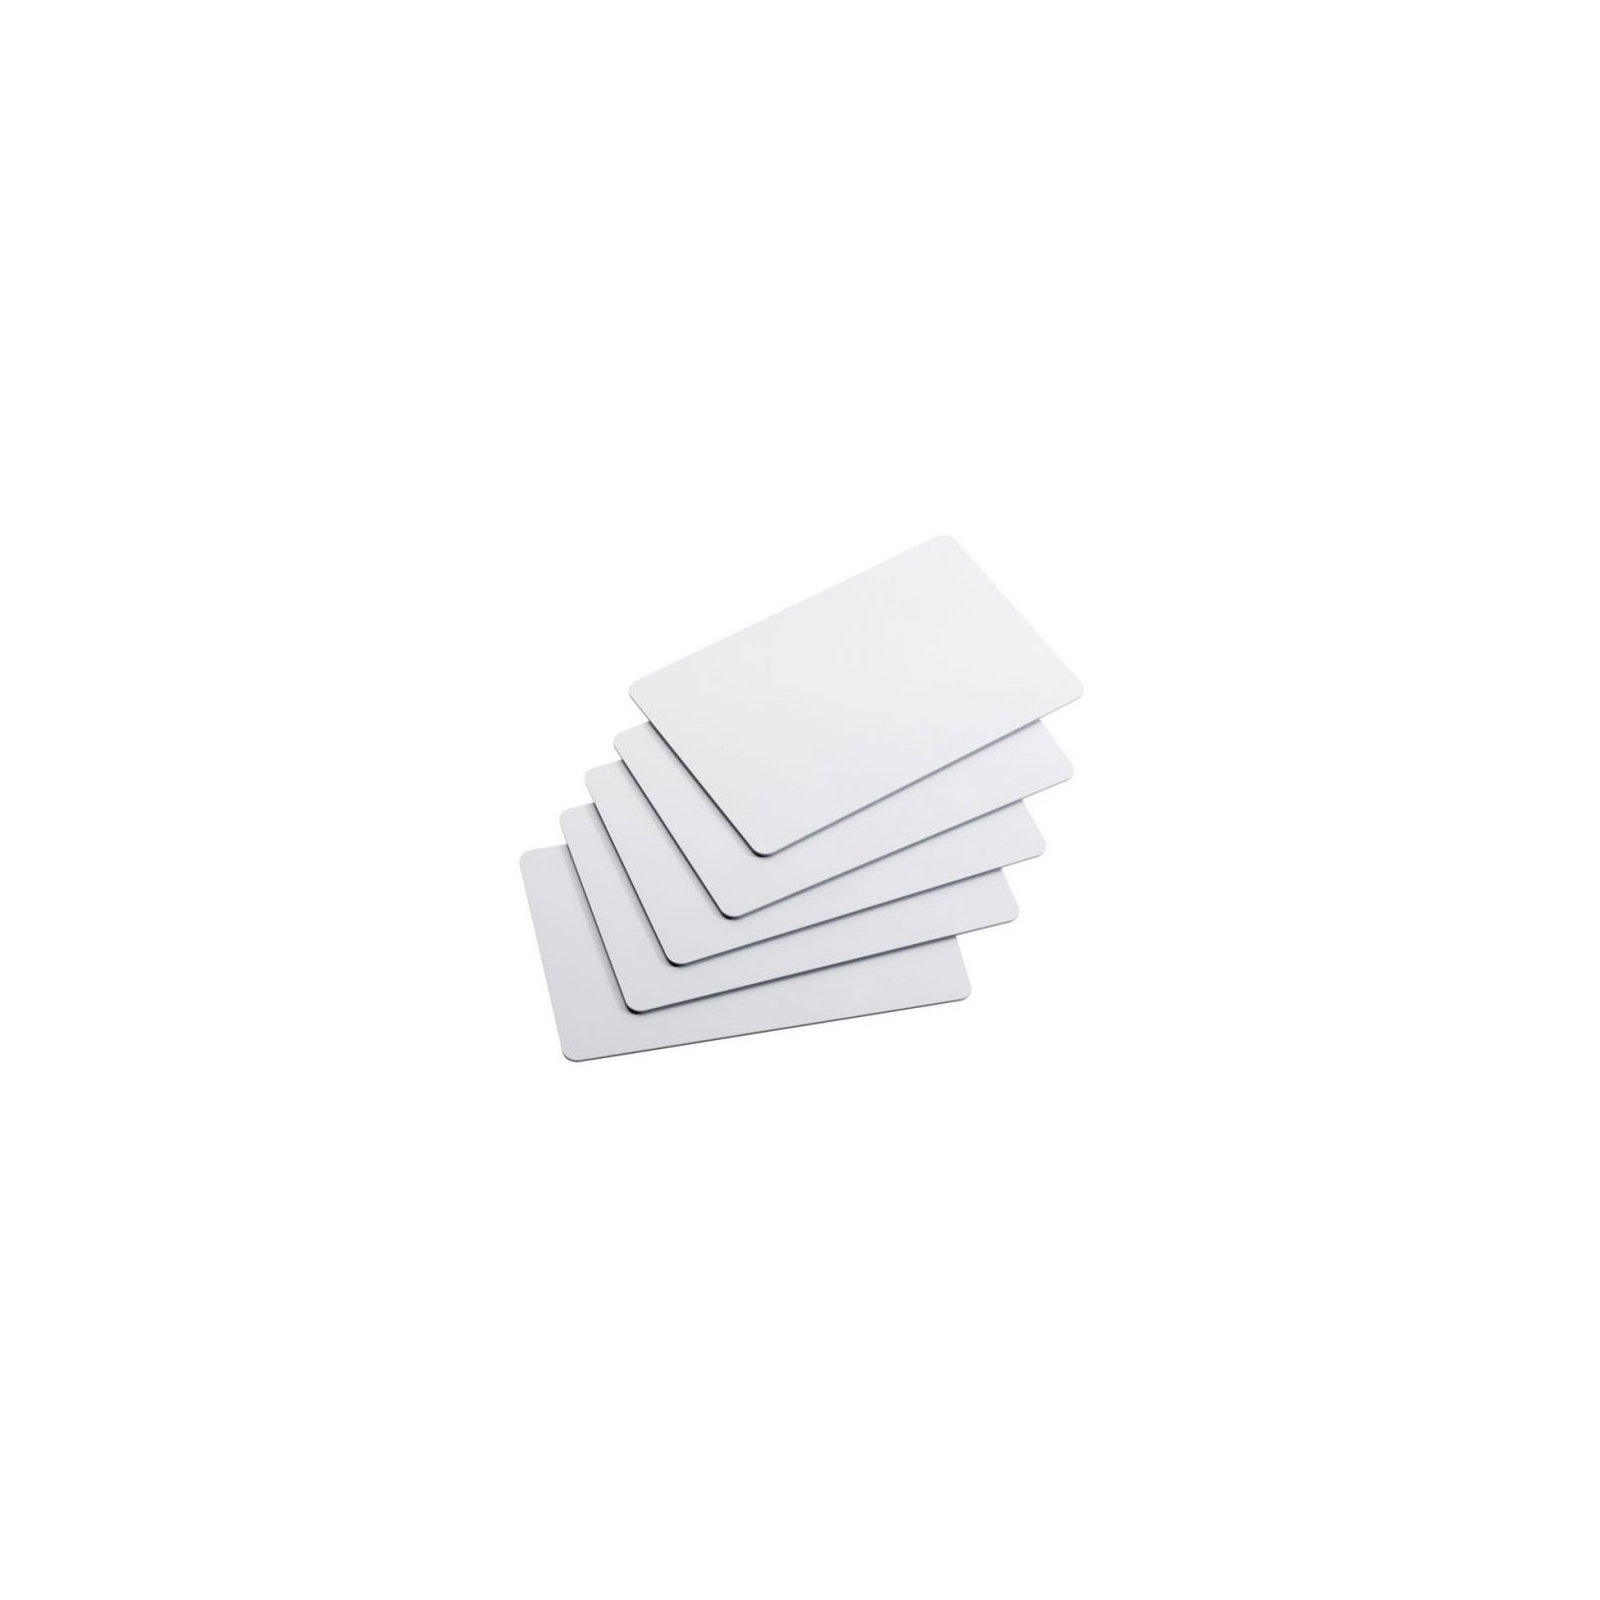 Бесконтактная карта EM-Marine 0.8мм white, чип TK4100 (01-001)